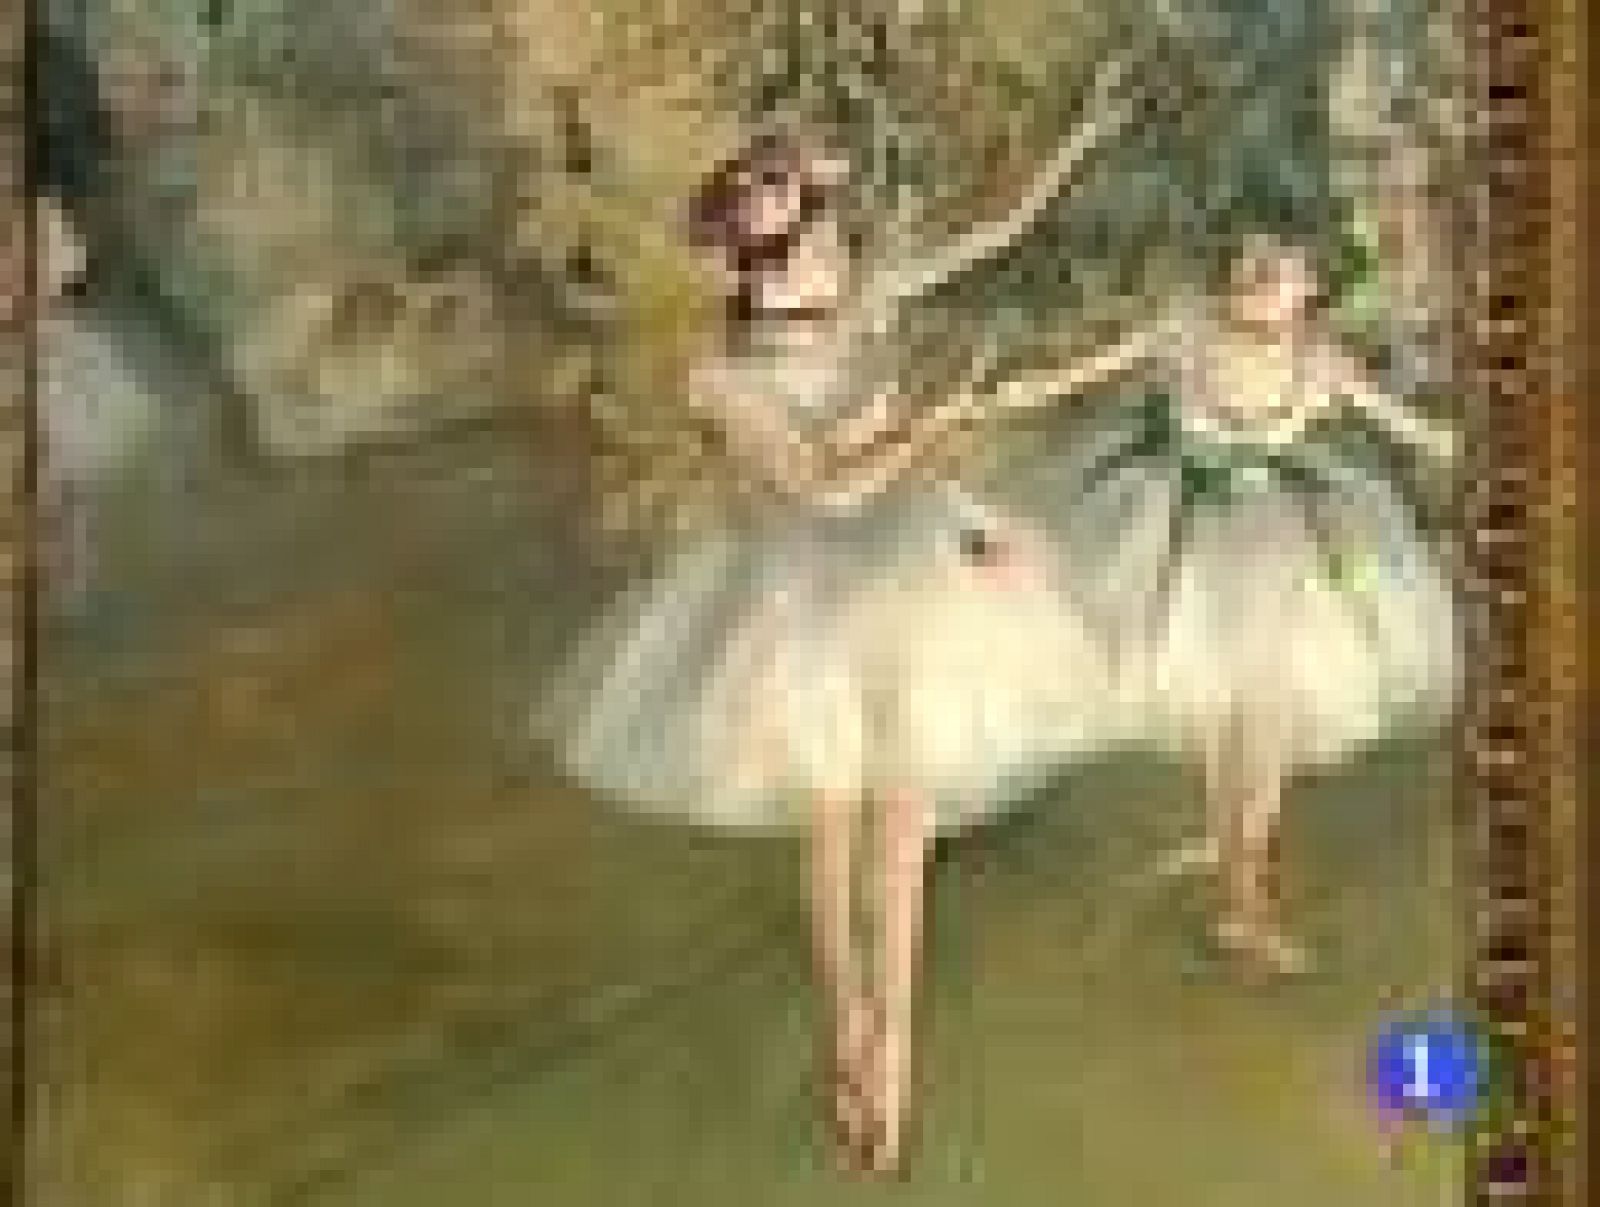 Telediario 1: "Pintar el movimiento" de Degas | RTVE Play